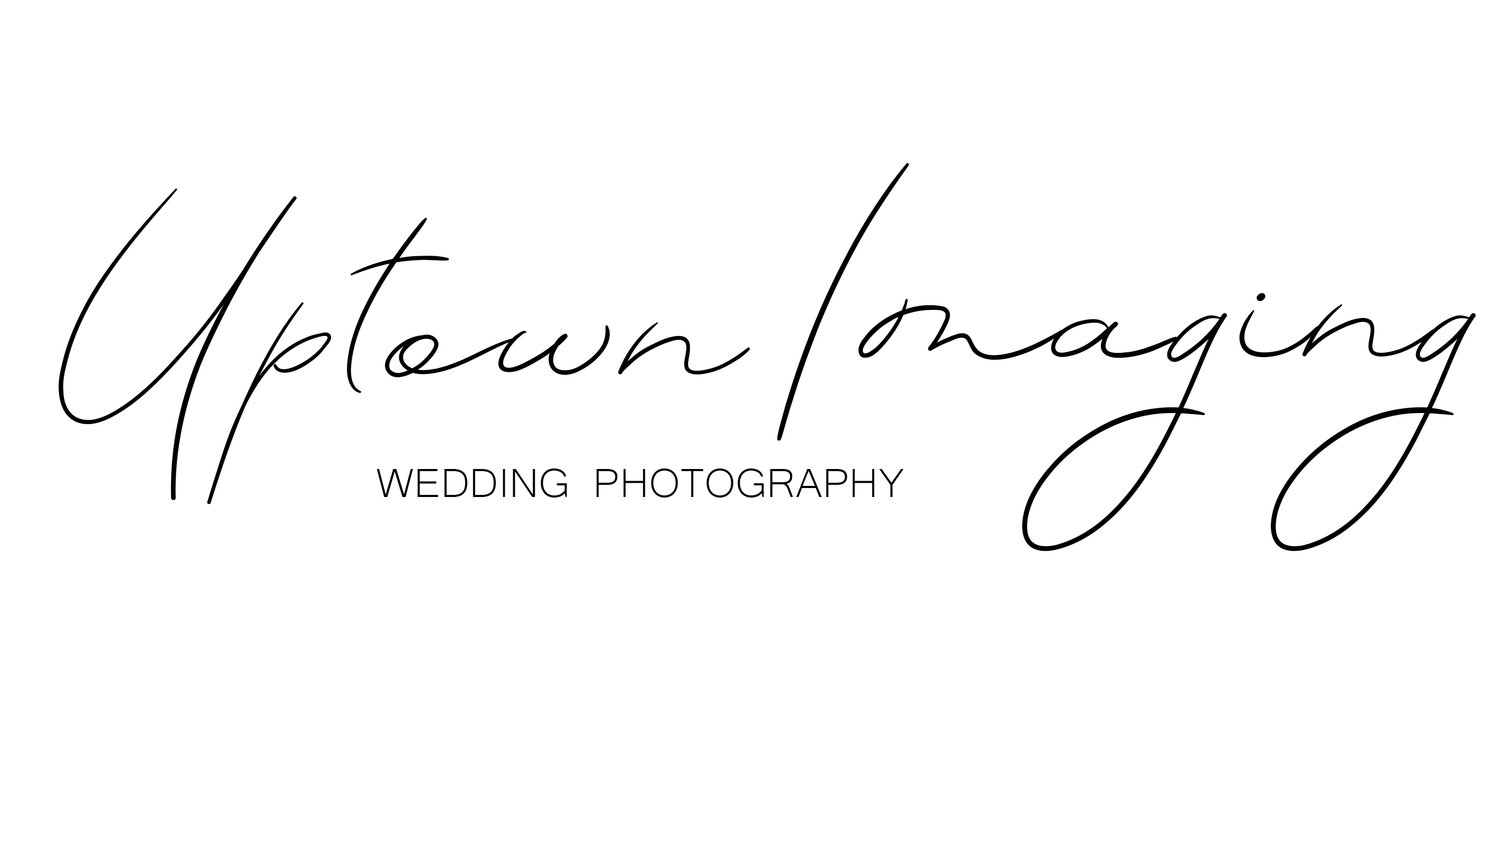 Uptown Imaging - Wedding Photography